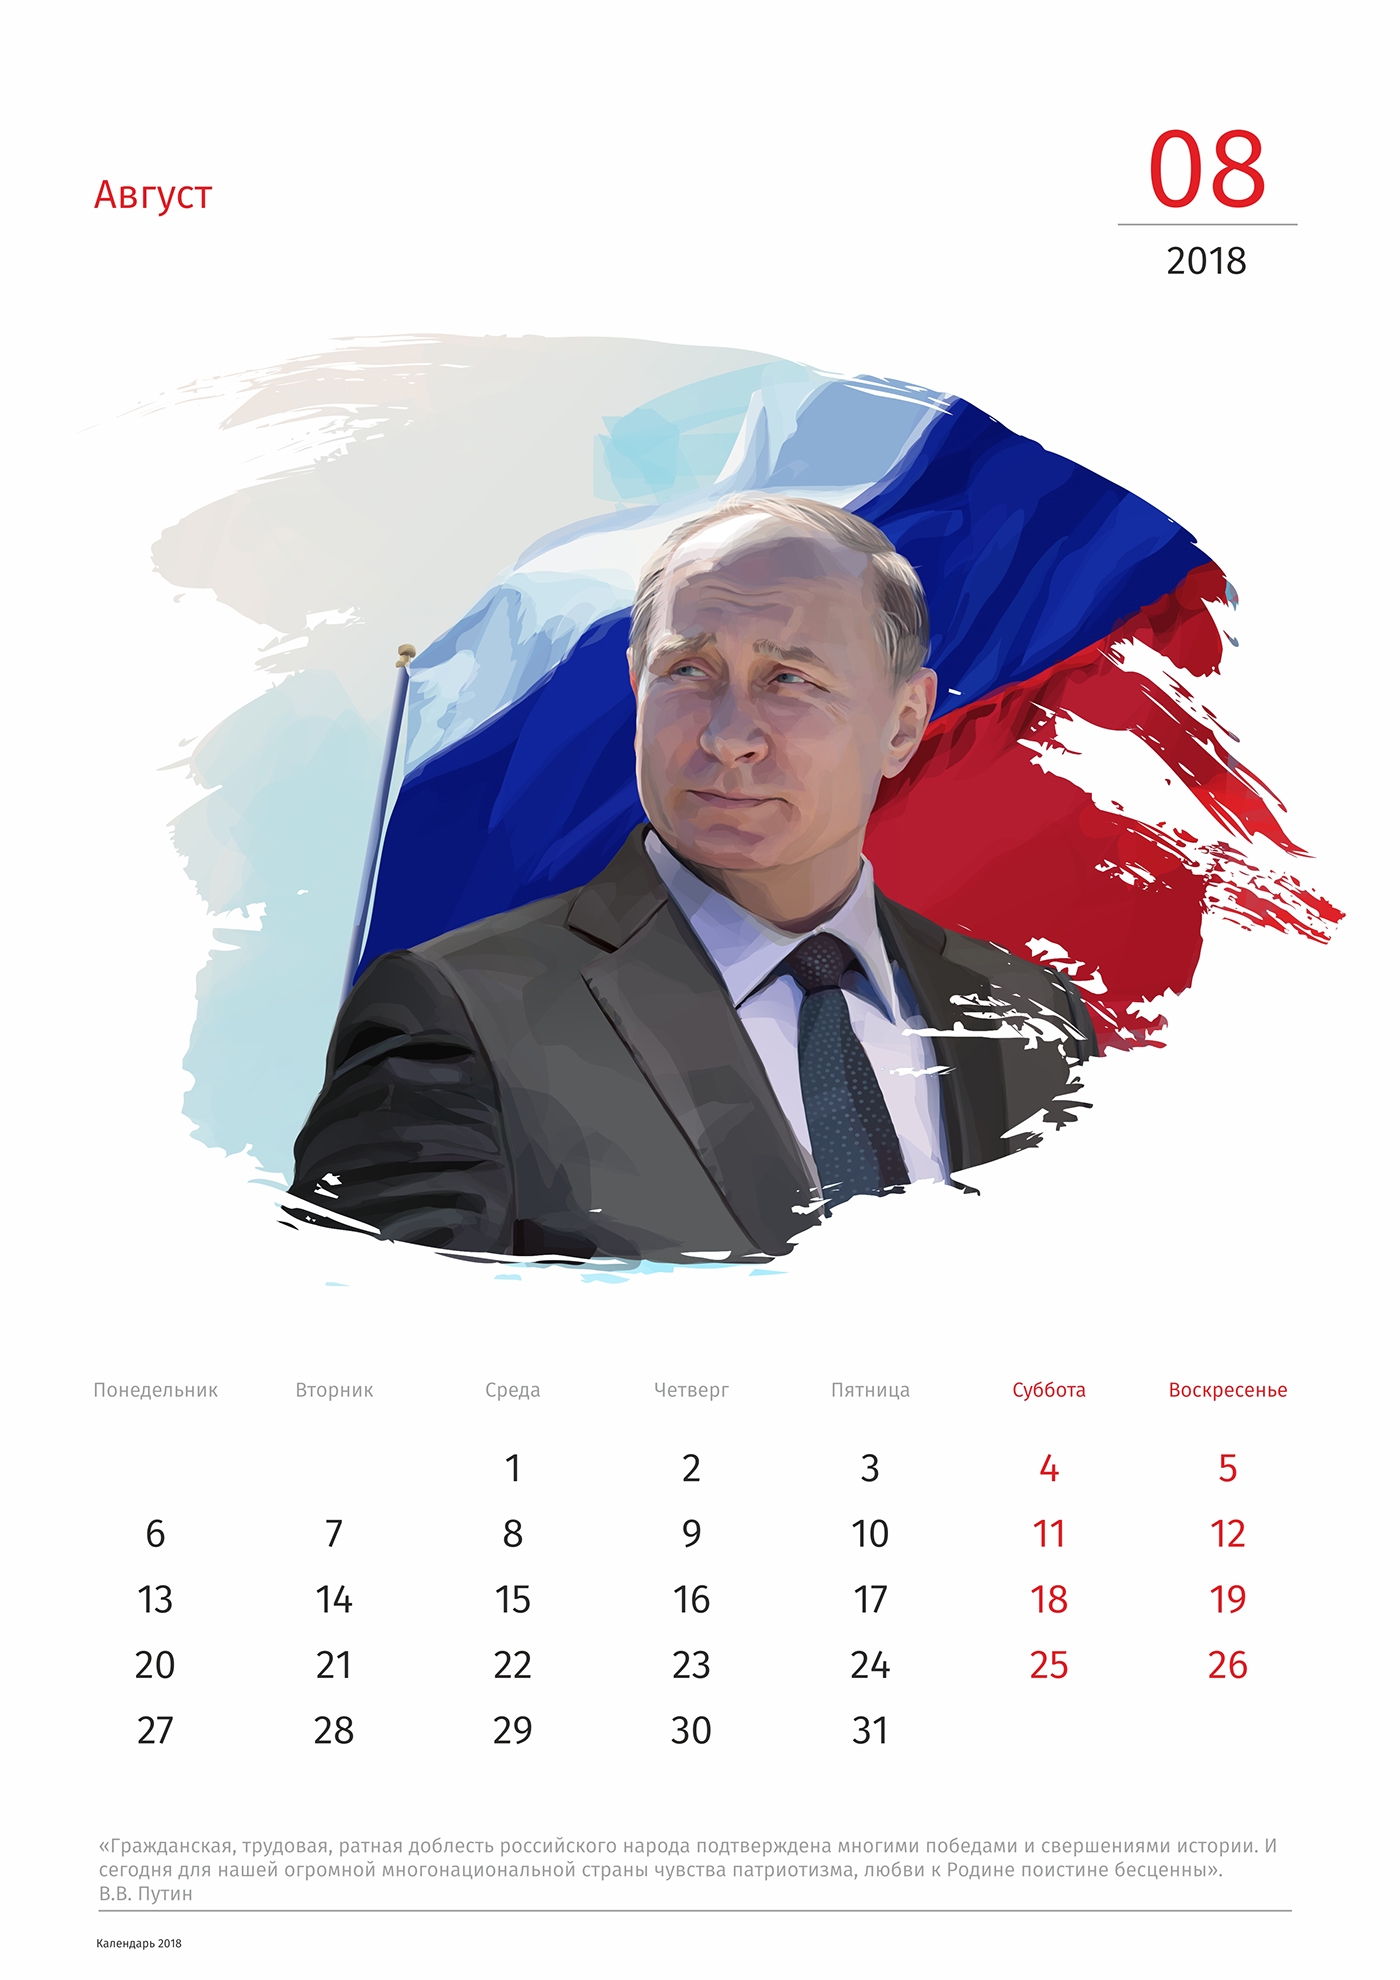 putin russianellection vote president Government Moscow russianfederation calendar vector Lineking